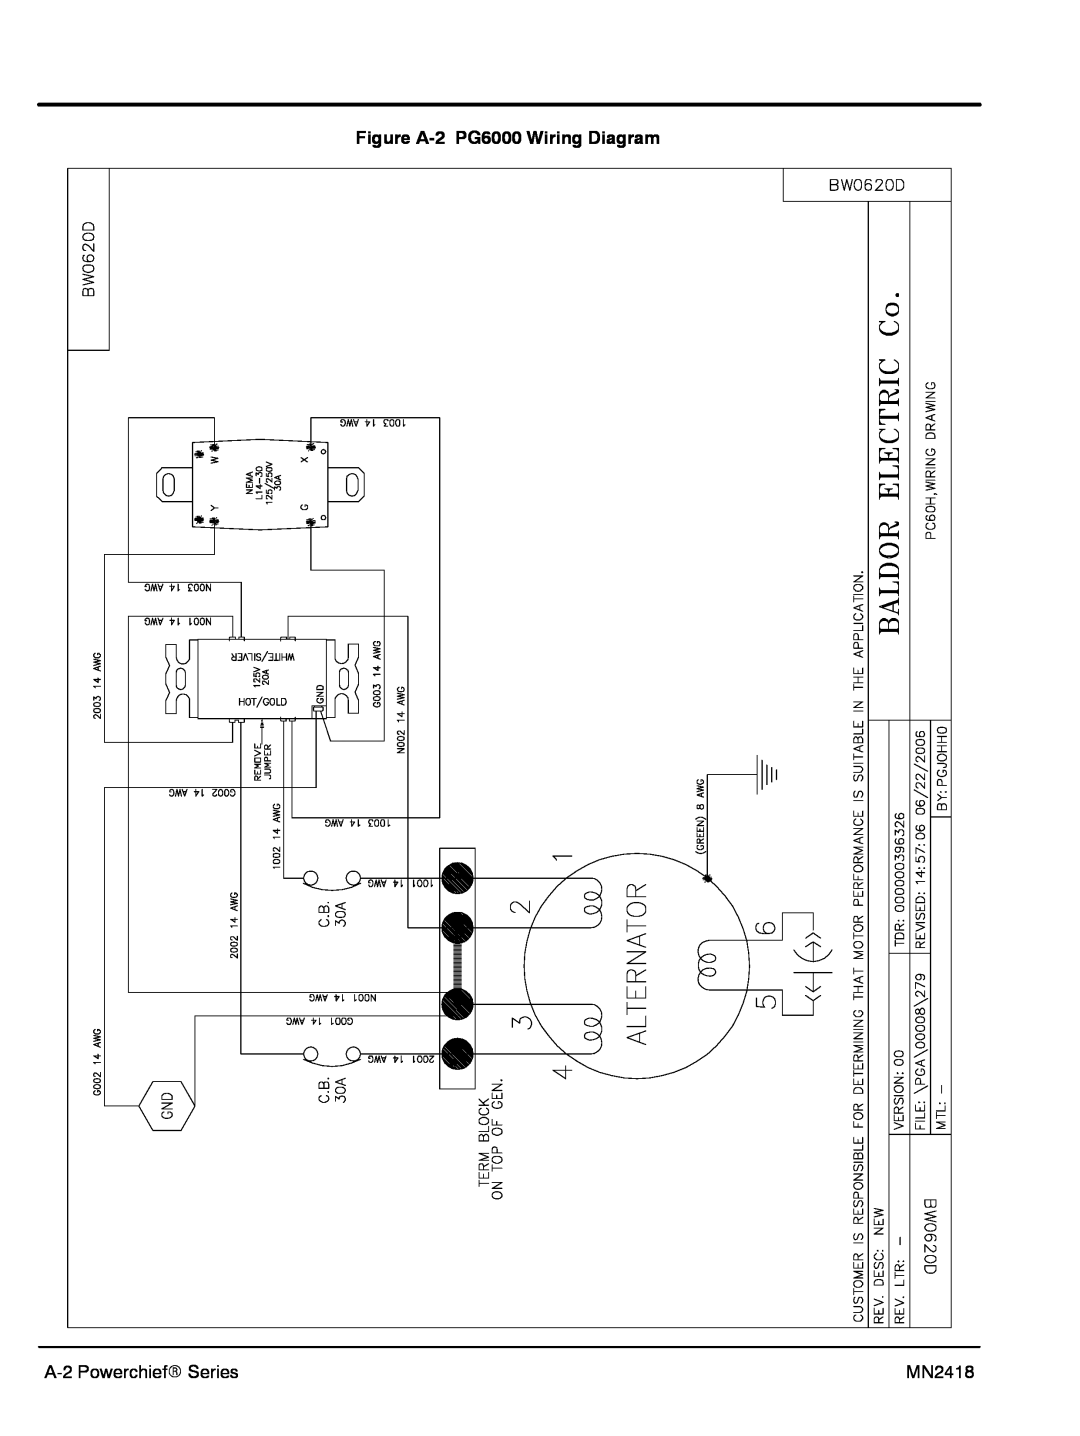 Baldor PG 6000 manual Figure A-2PG6000 Wiring Diagram, A-2PowerchiefR Series, MN2418 